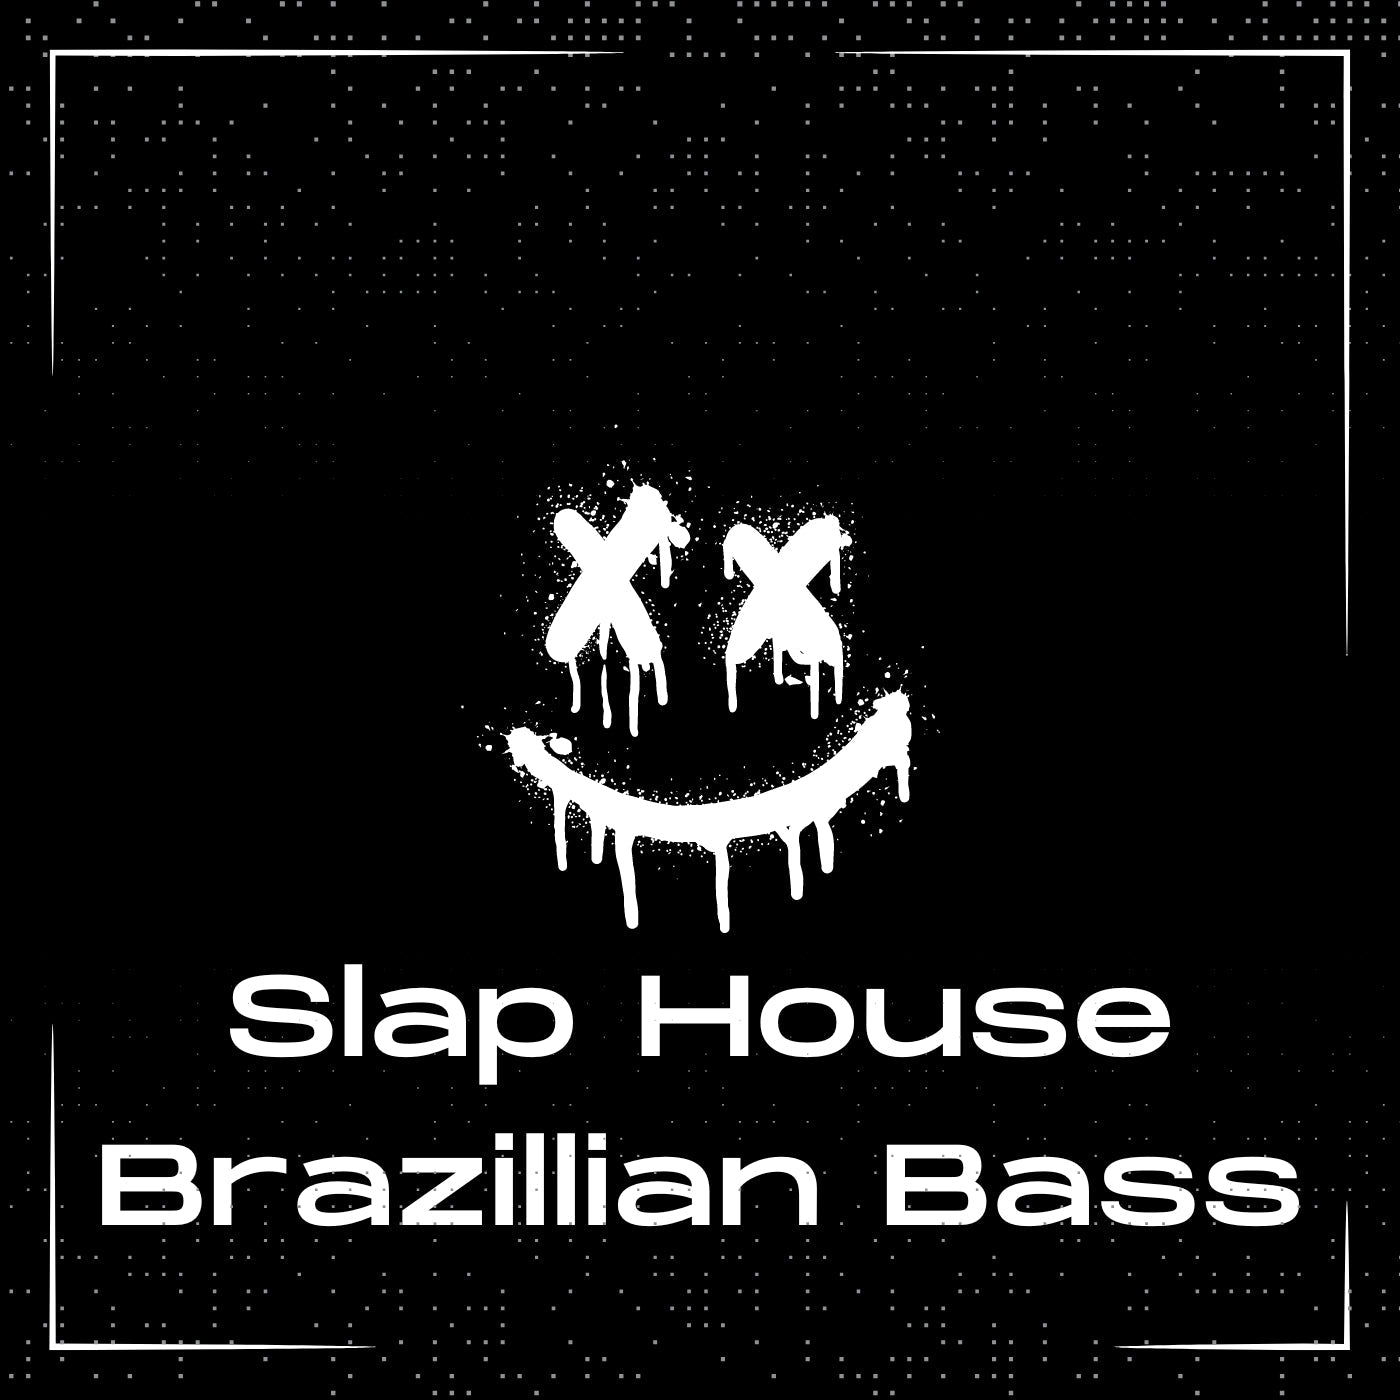 Slap house / Brazillian Bass Drop template - King of Templates - Tunebat Marketplace